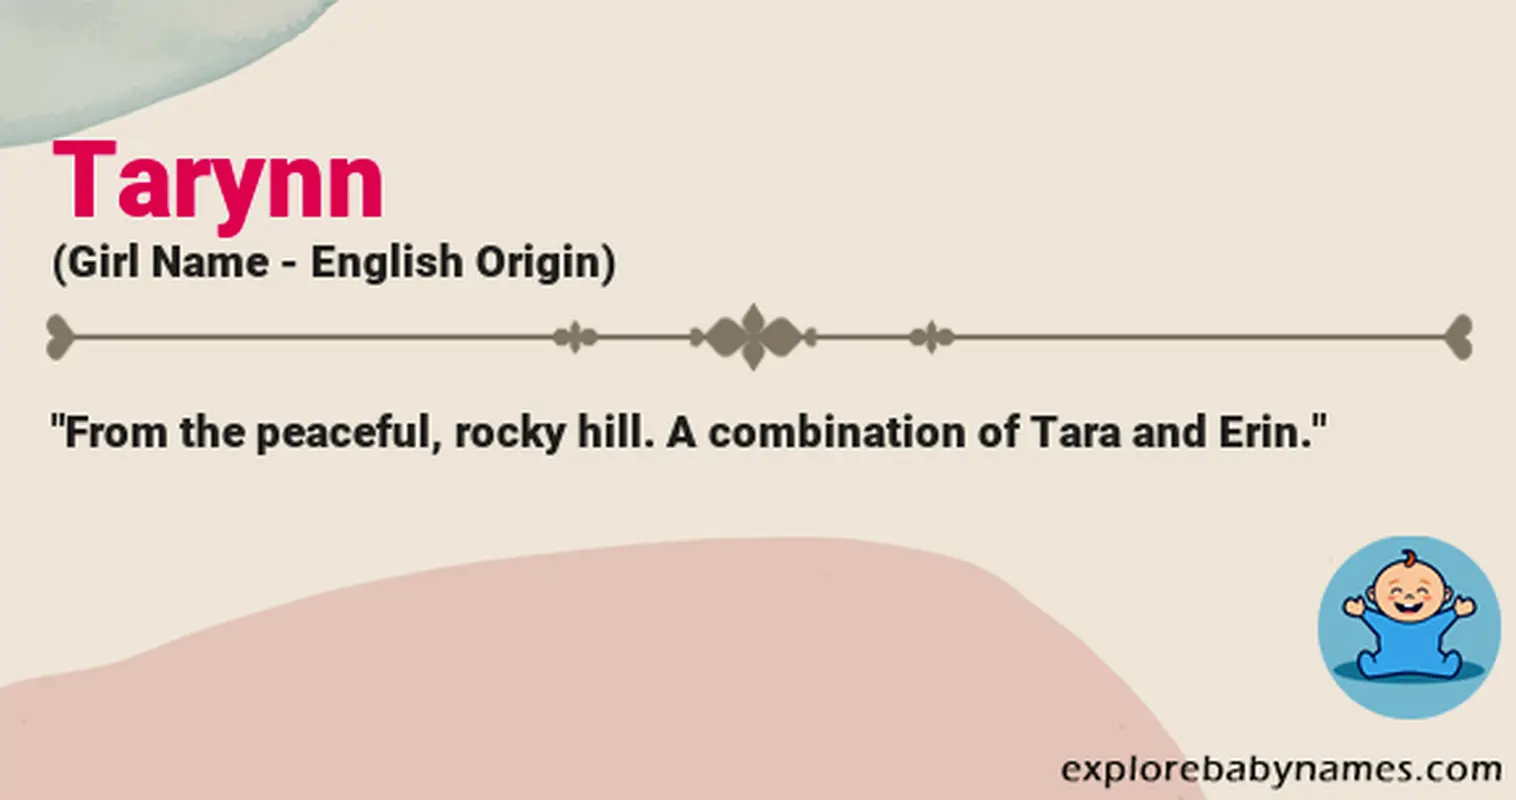 Meaning of Tarynn